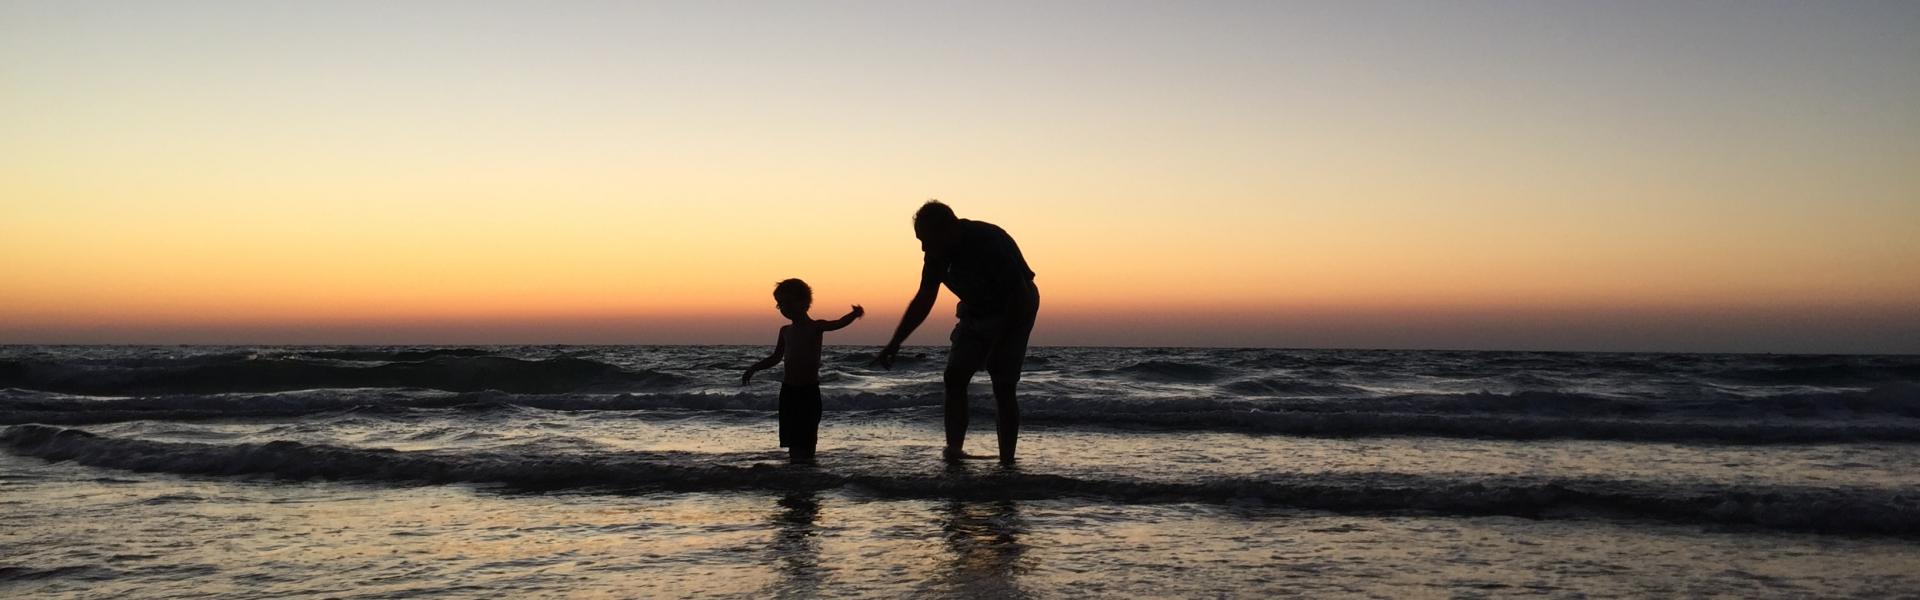 silhouette of man and kid on seashore